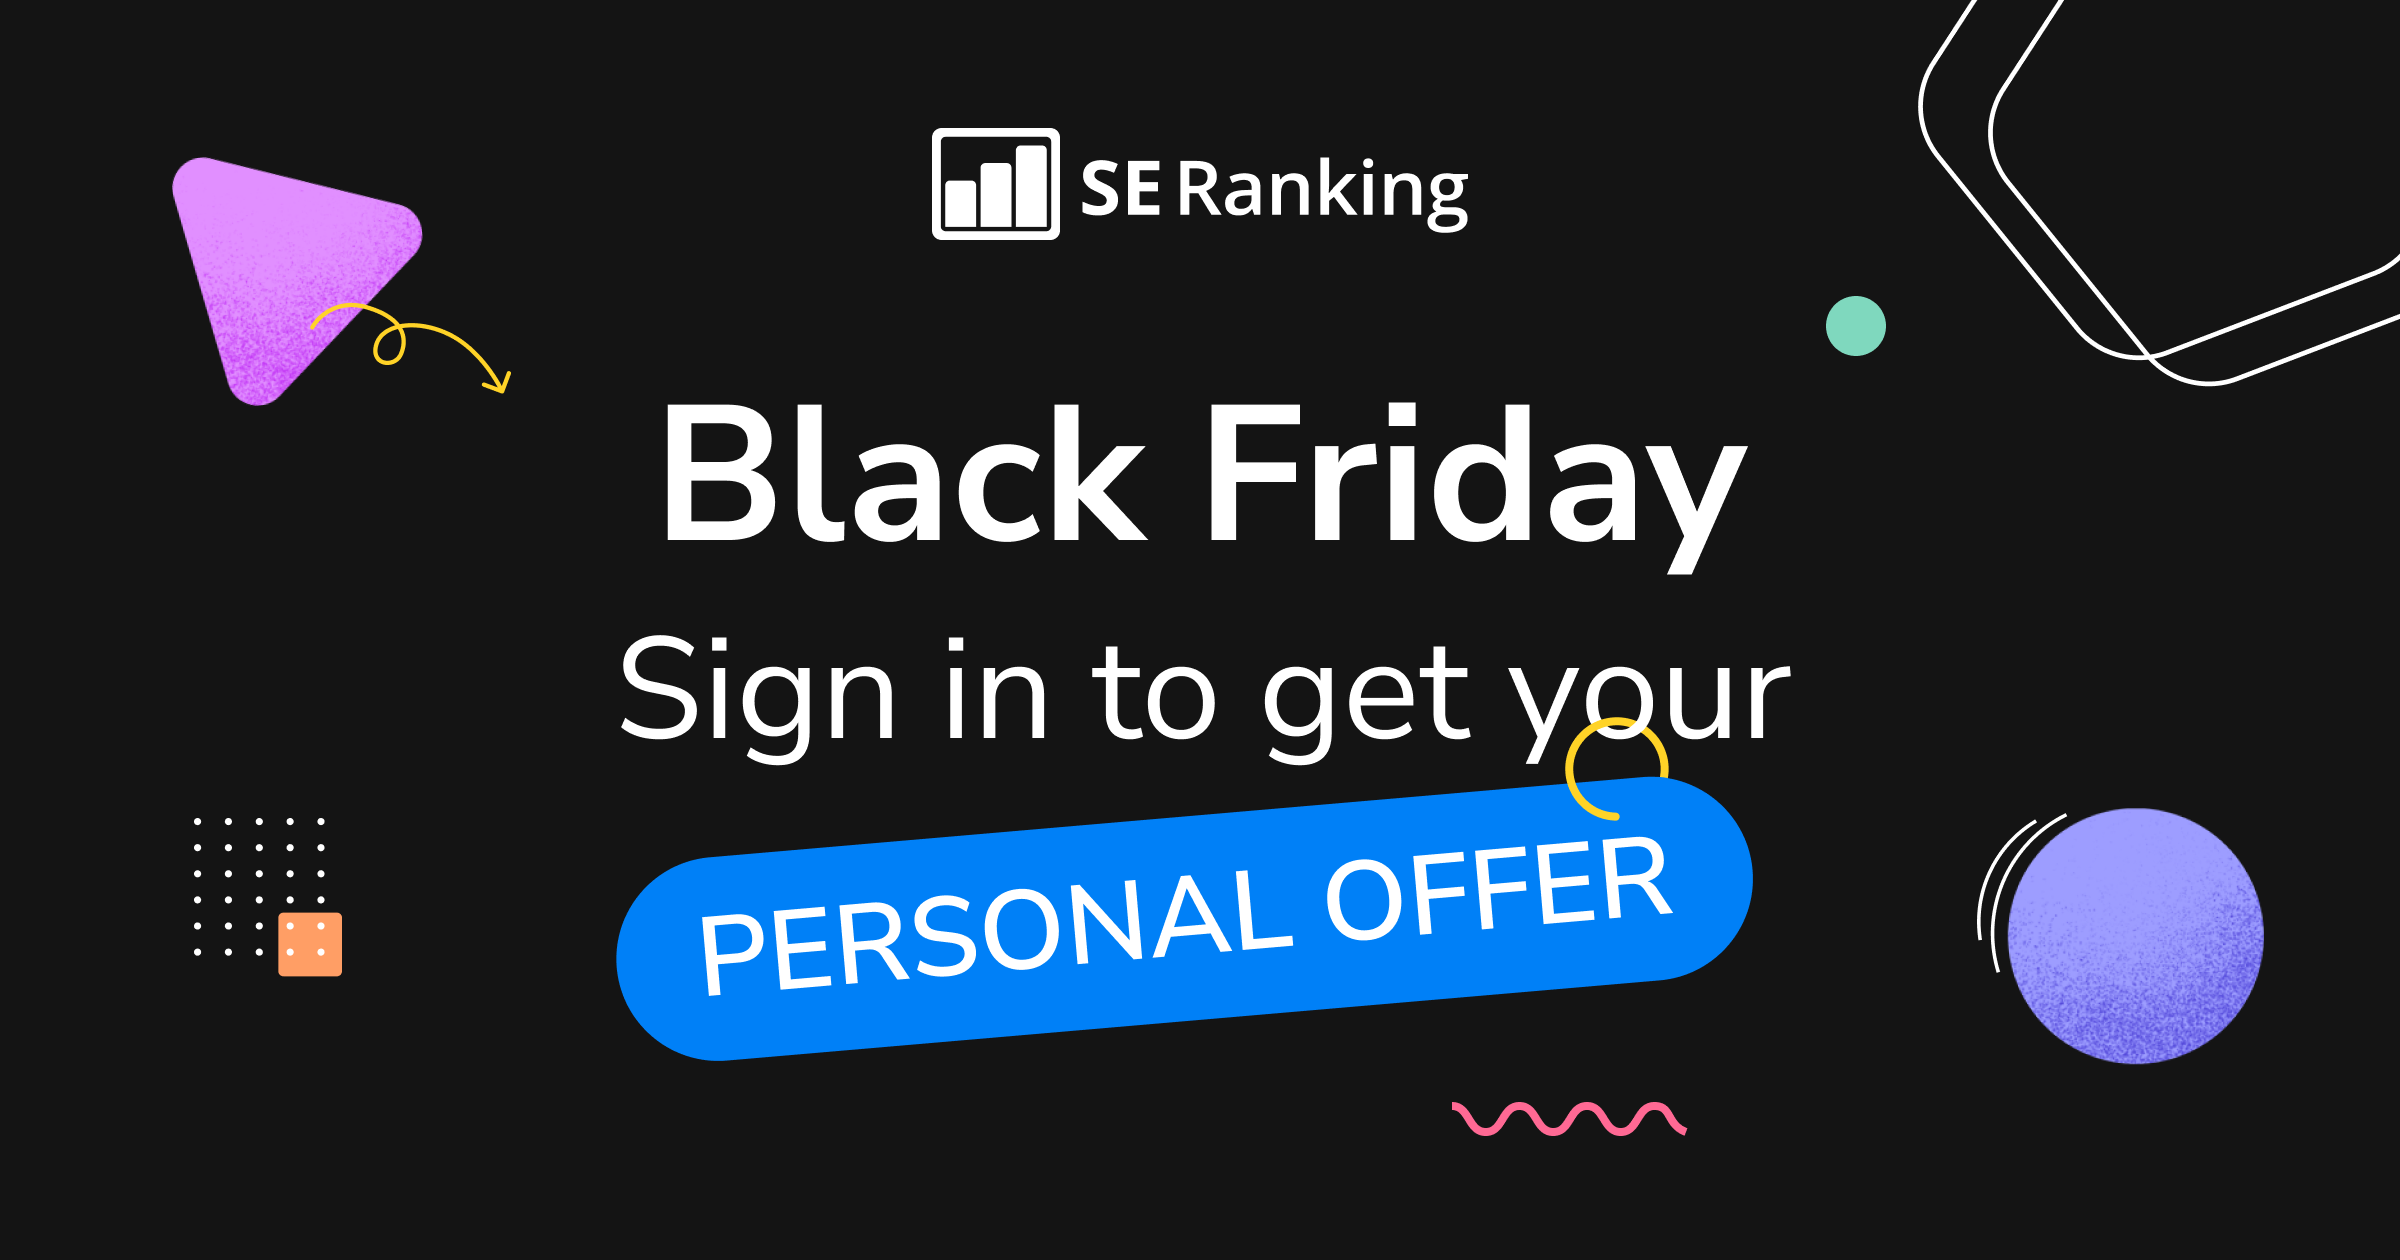 SE Ranking Black Friday Deal